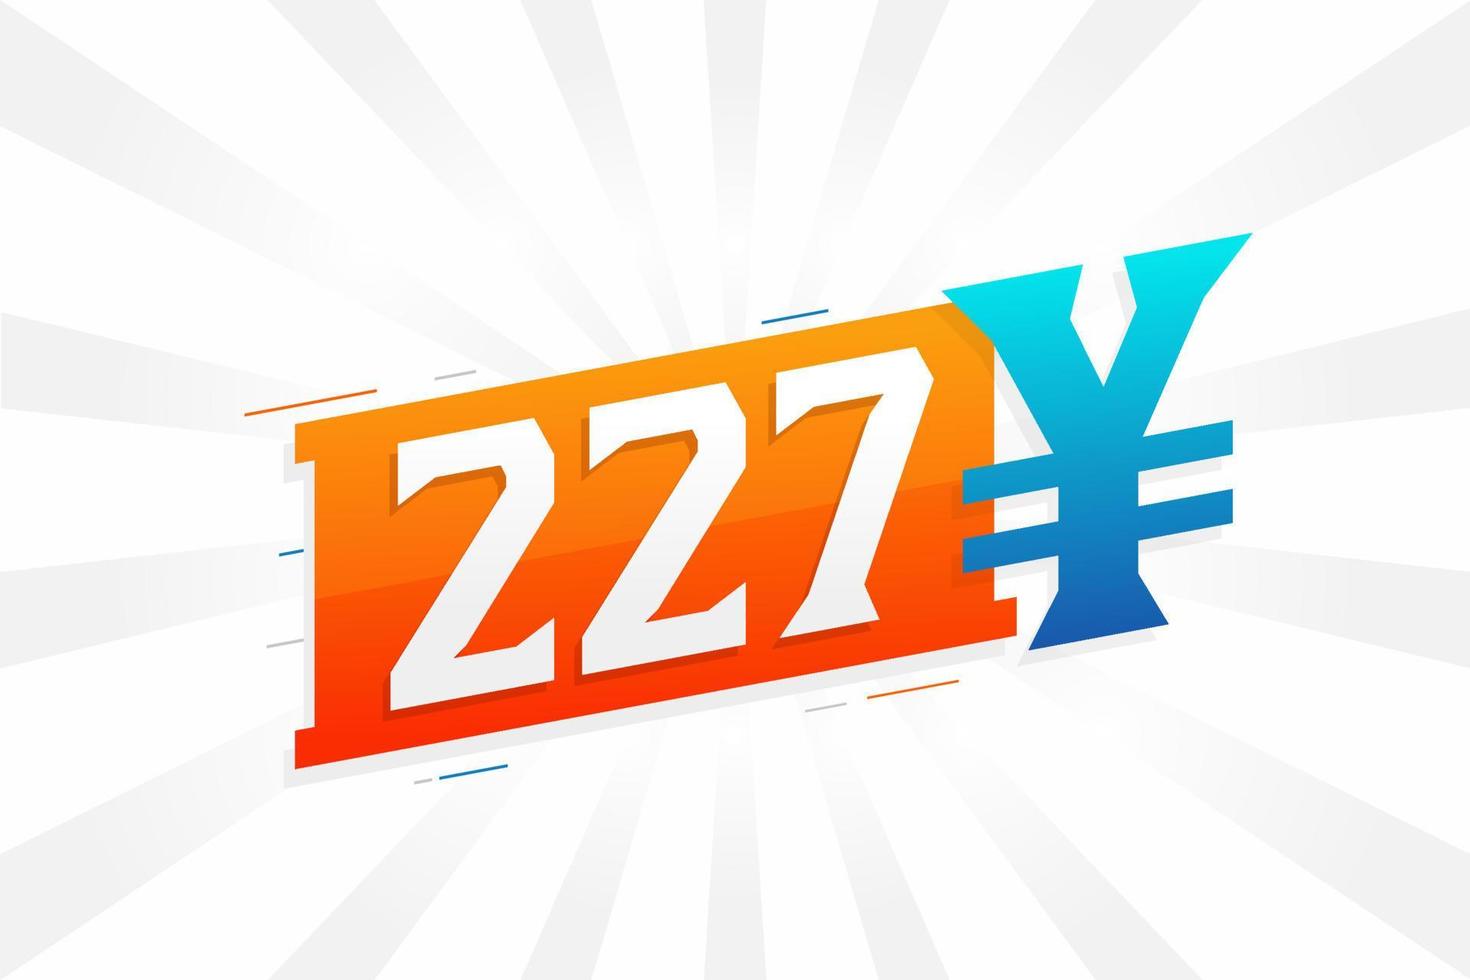 227 yuan Cinese moneta vettore testo simbolo. 227 yen giapponese moneta i soldi azione vettore